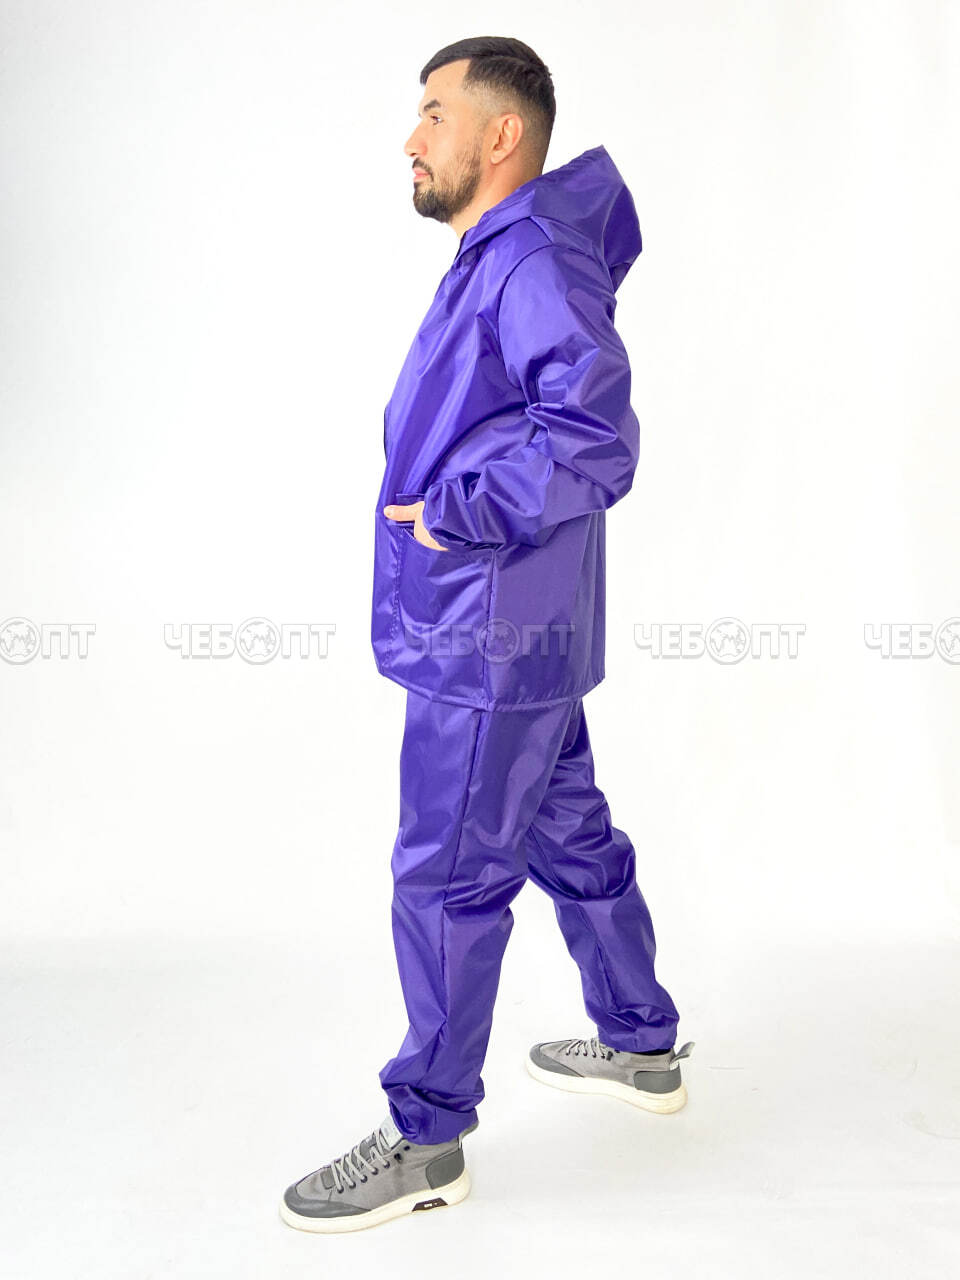 Костюм-дождевик (куртка, брюки),ЧЕБПРО,размер 44-46,100% полиэстер, Арт. ДожКост/фиолетовый, МПС [15] СобПр. ЧЕБОПТ.